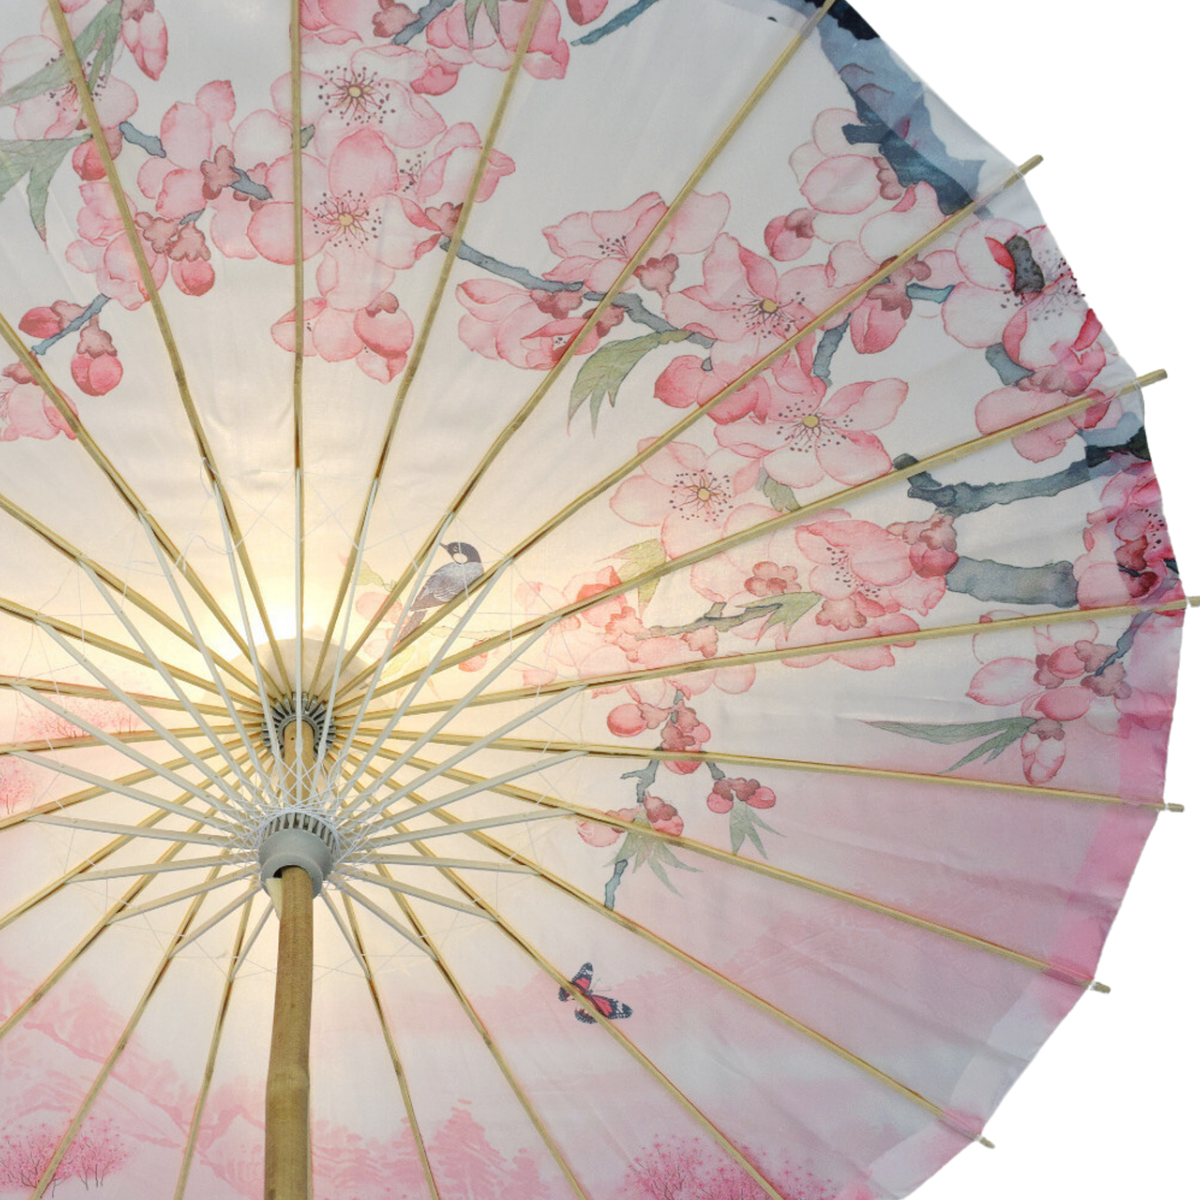 32&quot; Pink Cherry Blossom Premium Nylon Parasol Umbrella with Elegant Handle